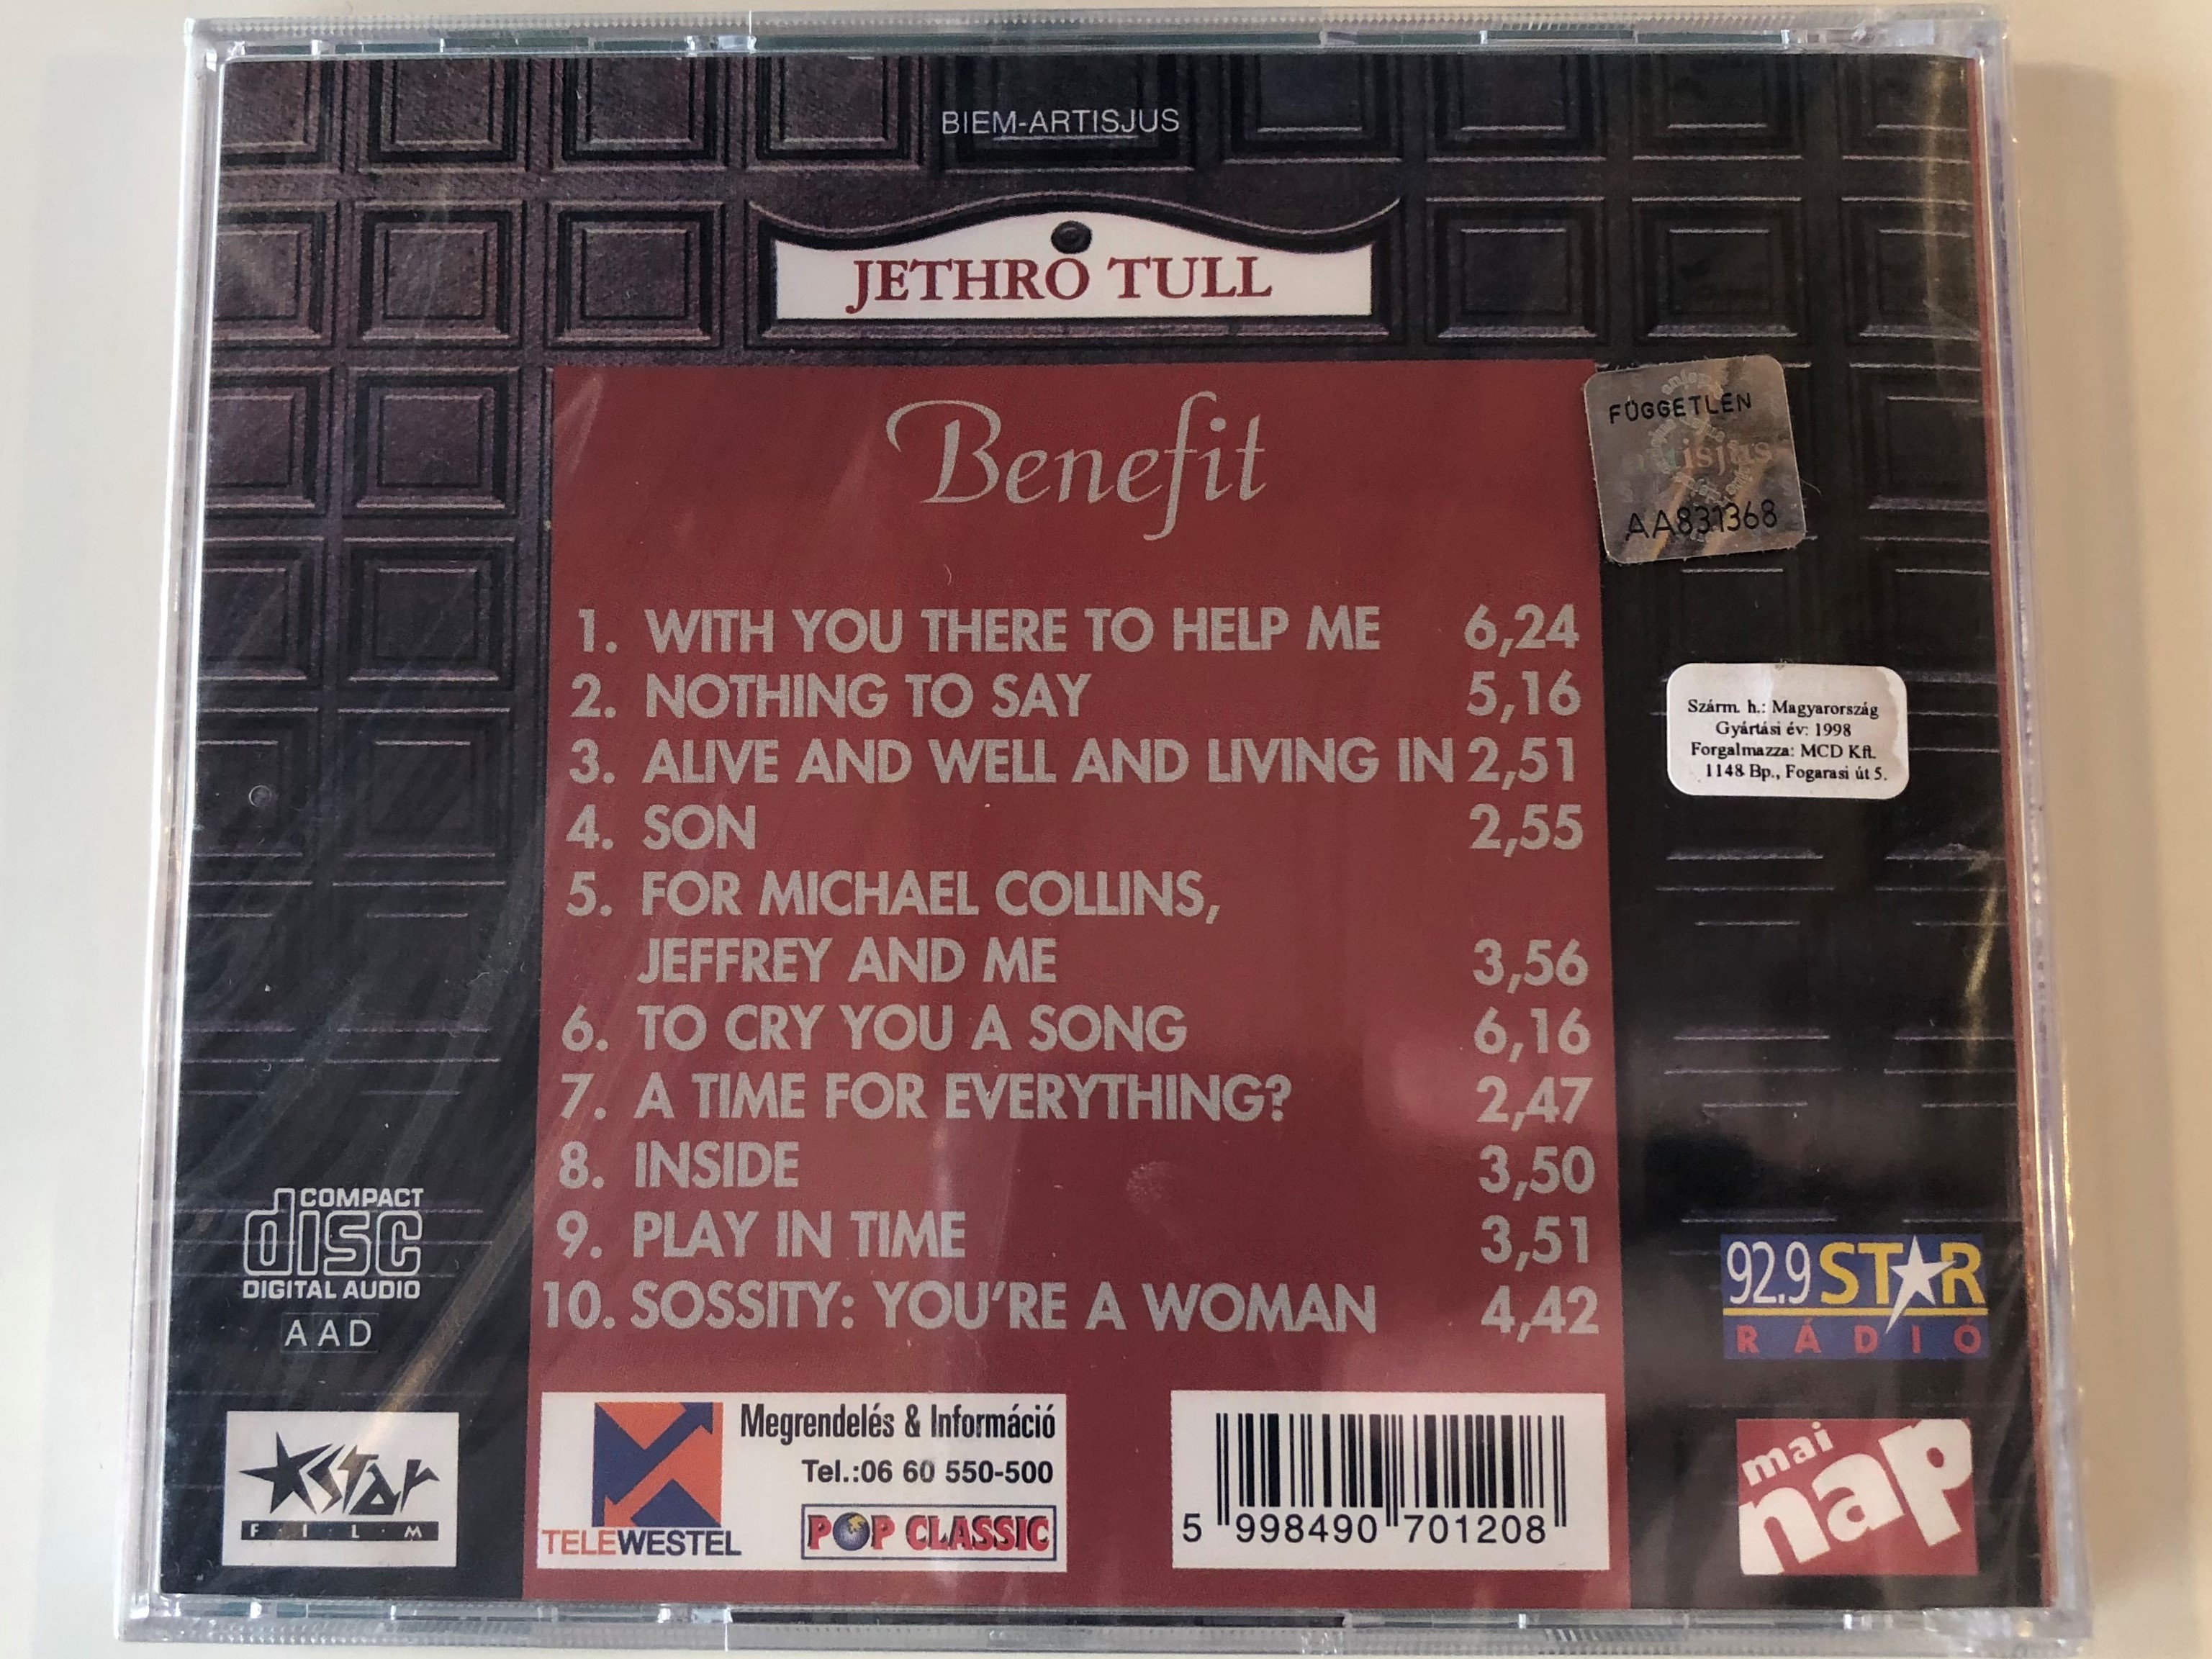 benefit-jethro-tull-pop-classic-audio-cd-5998490701208-2-.jpg